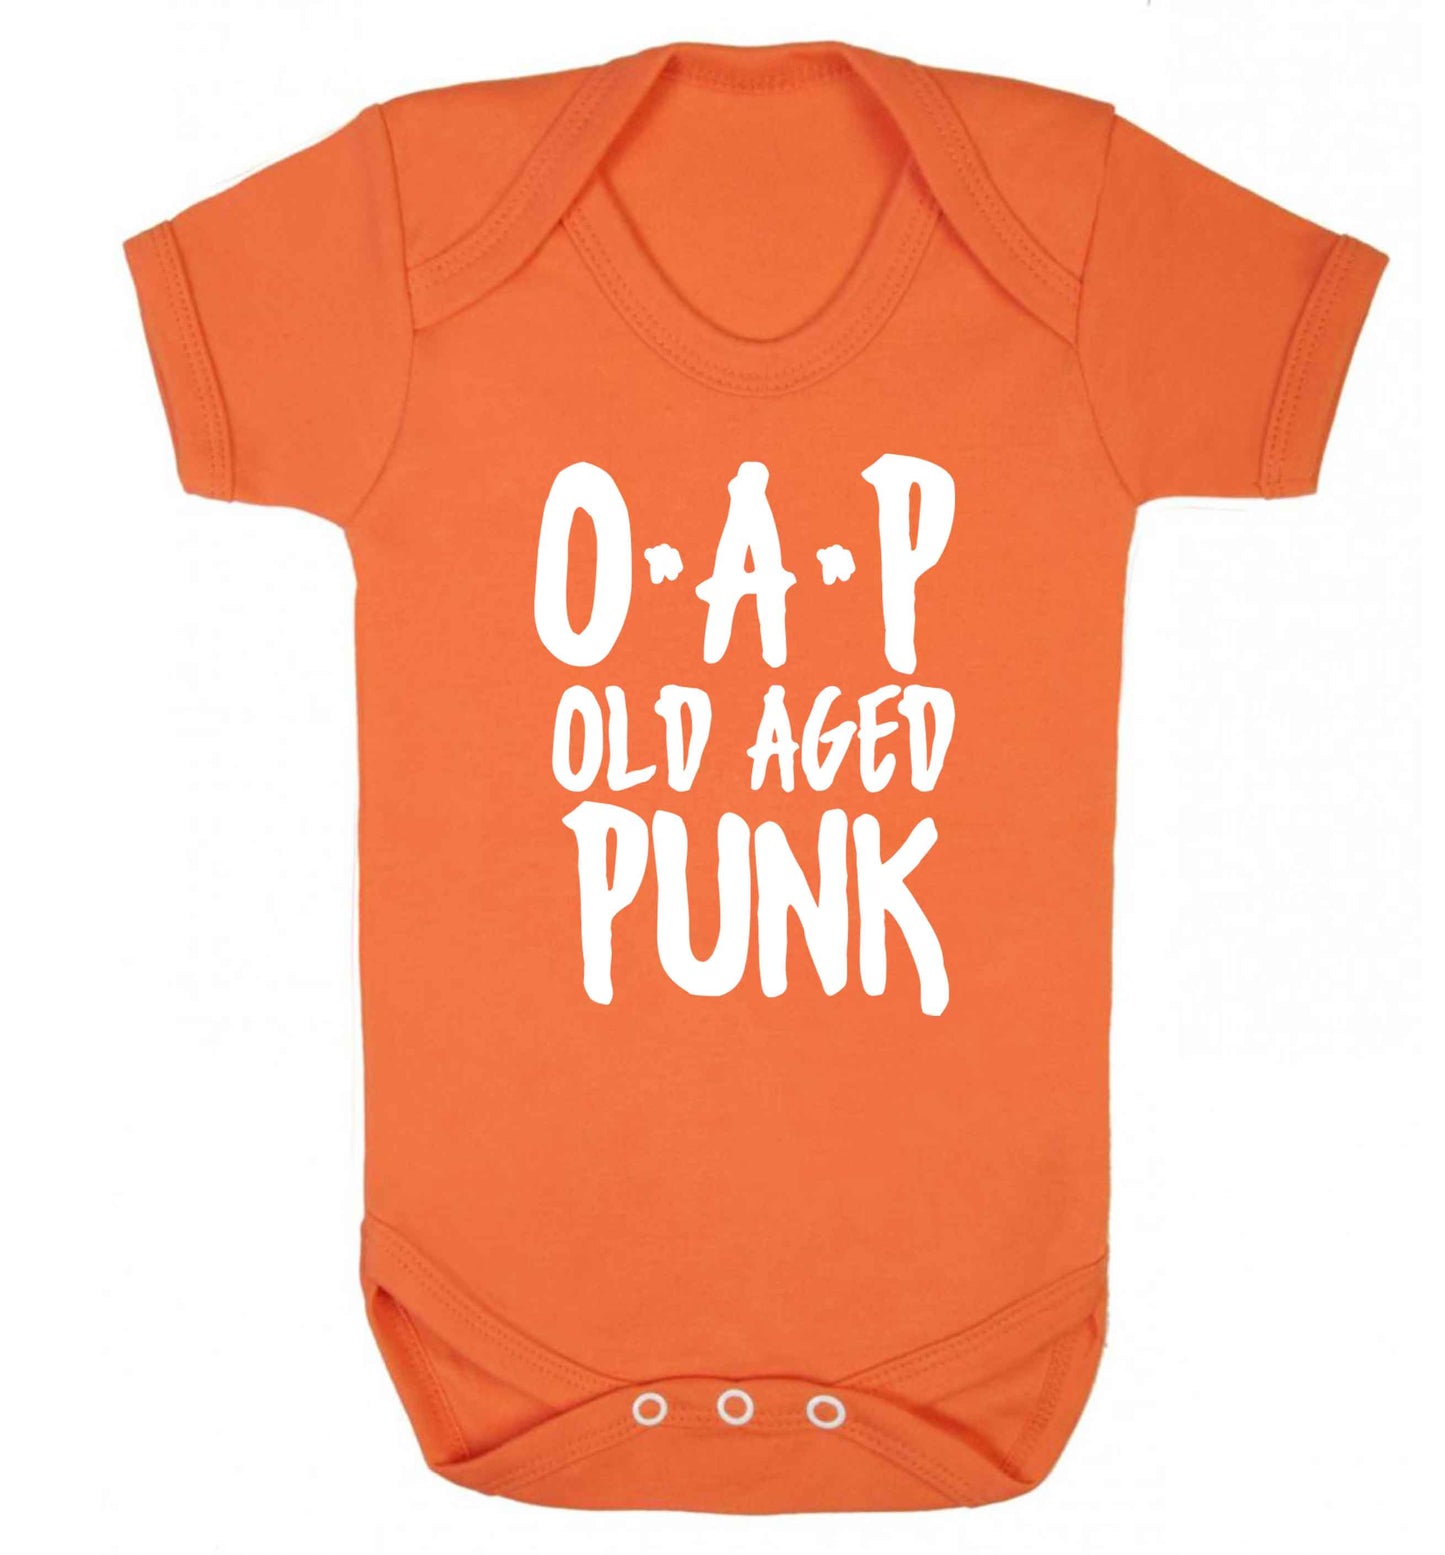 O.A.P Old Age Punk Baby Vest orange 18-24 months